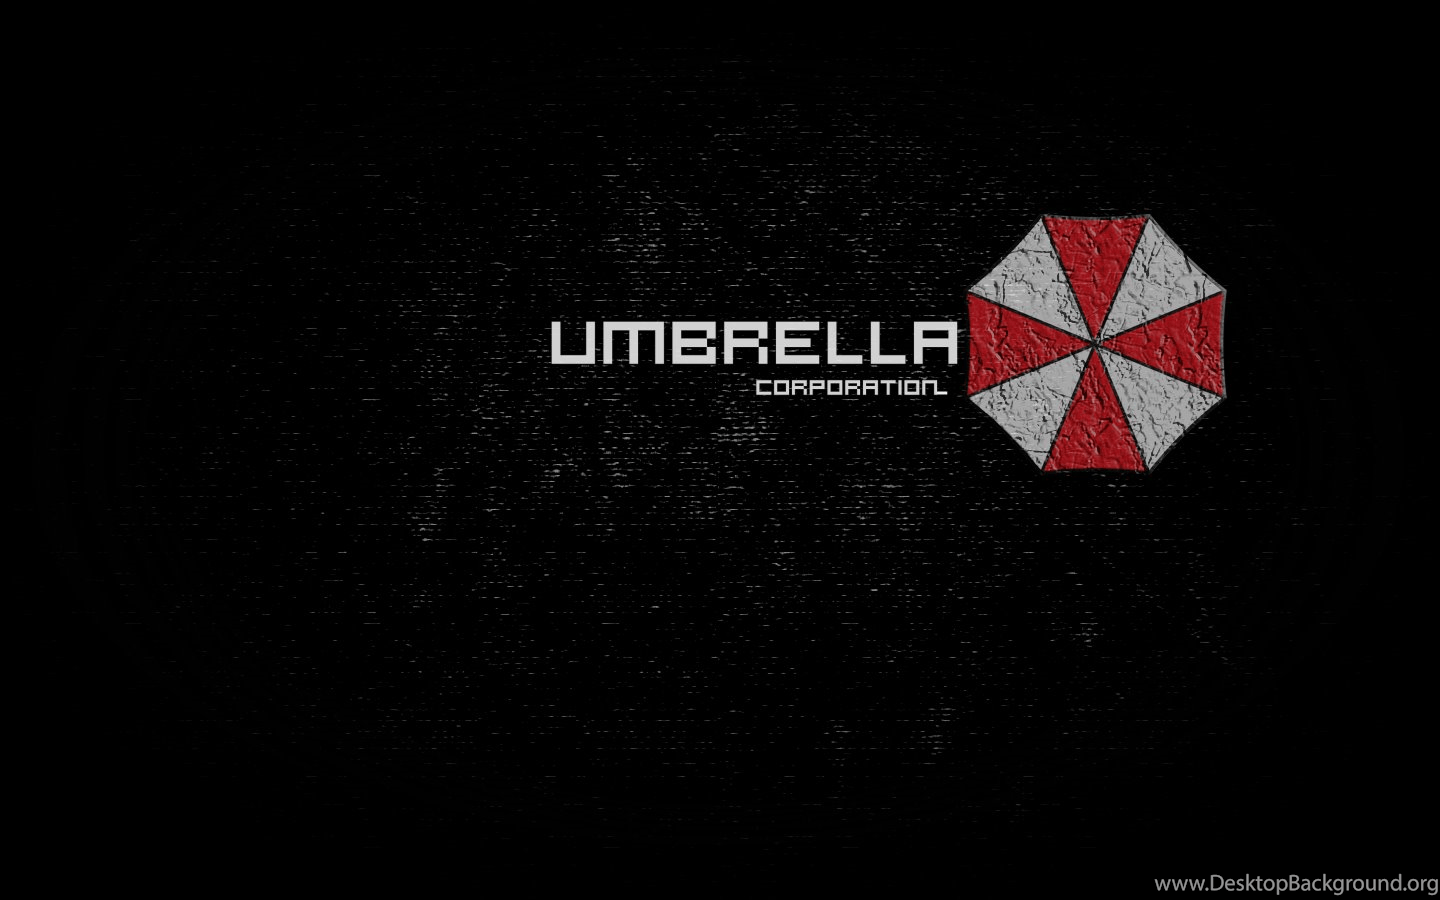 Download Umbrella Corporation Wallpaper Background 8262 1920x1080